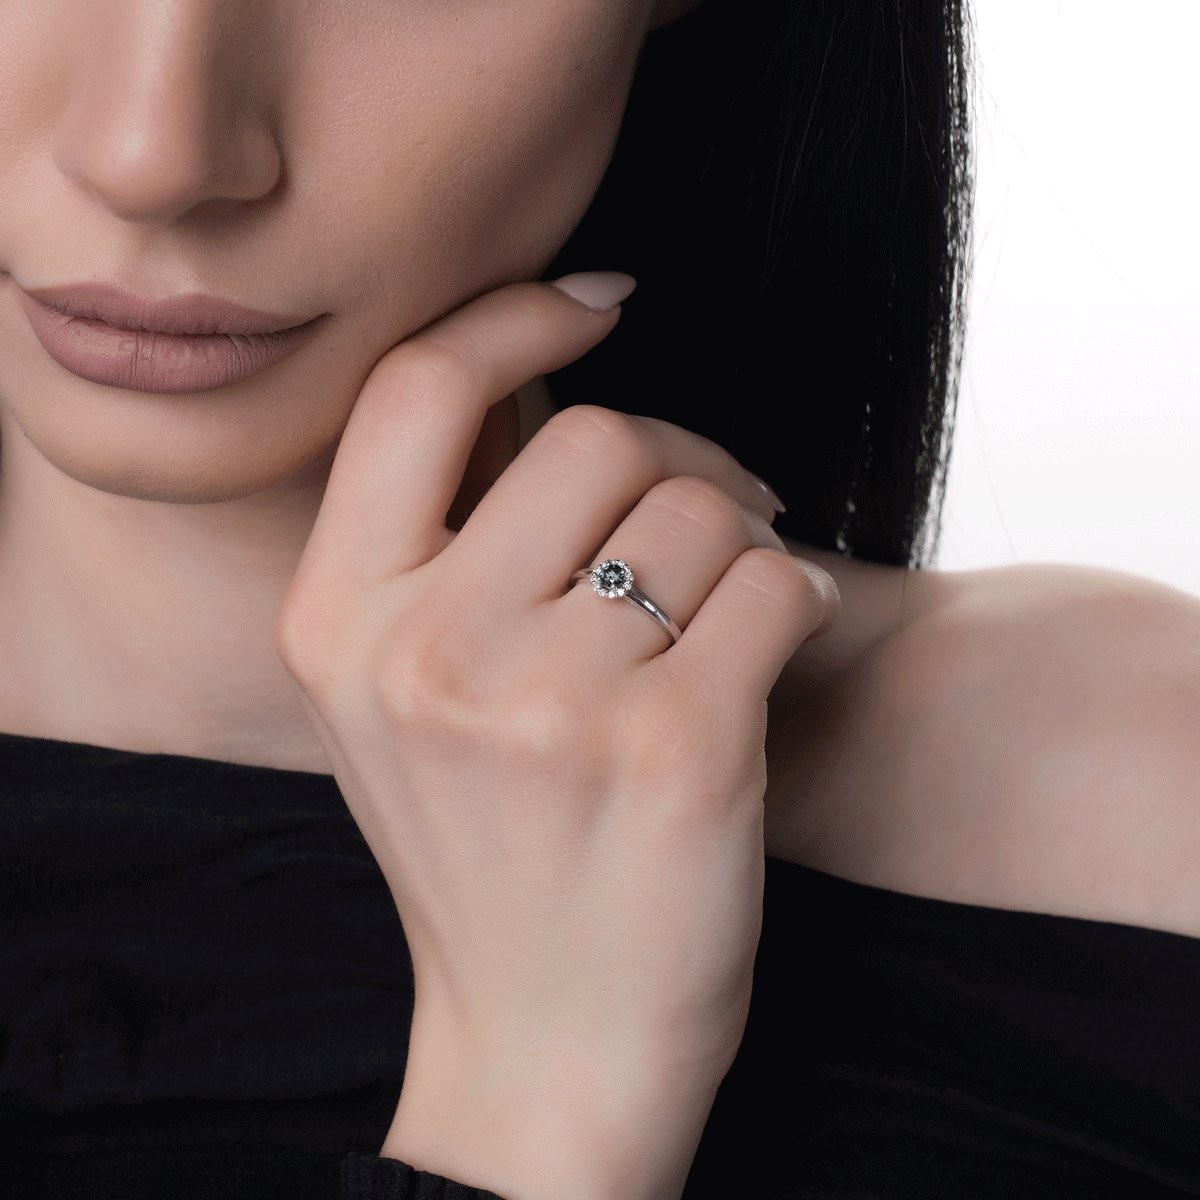 Inel de logodna din aur alb de 18K cu diamant albastru de 0.22ct si diamante de 0.1ct